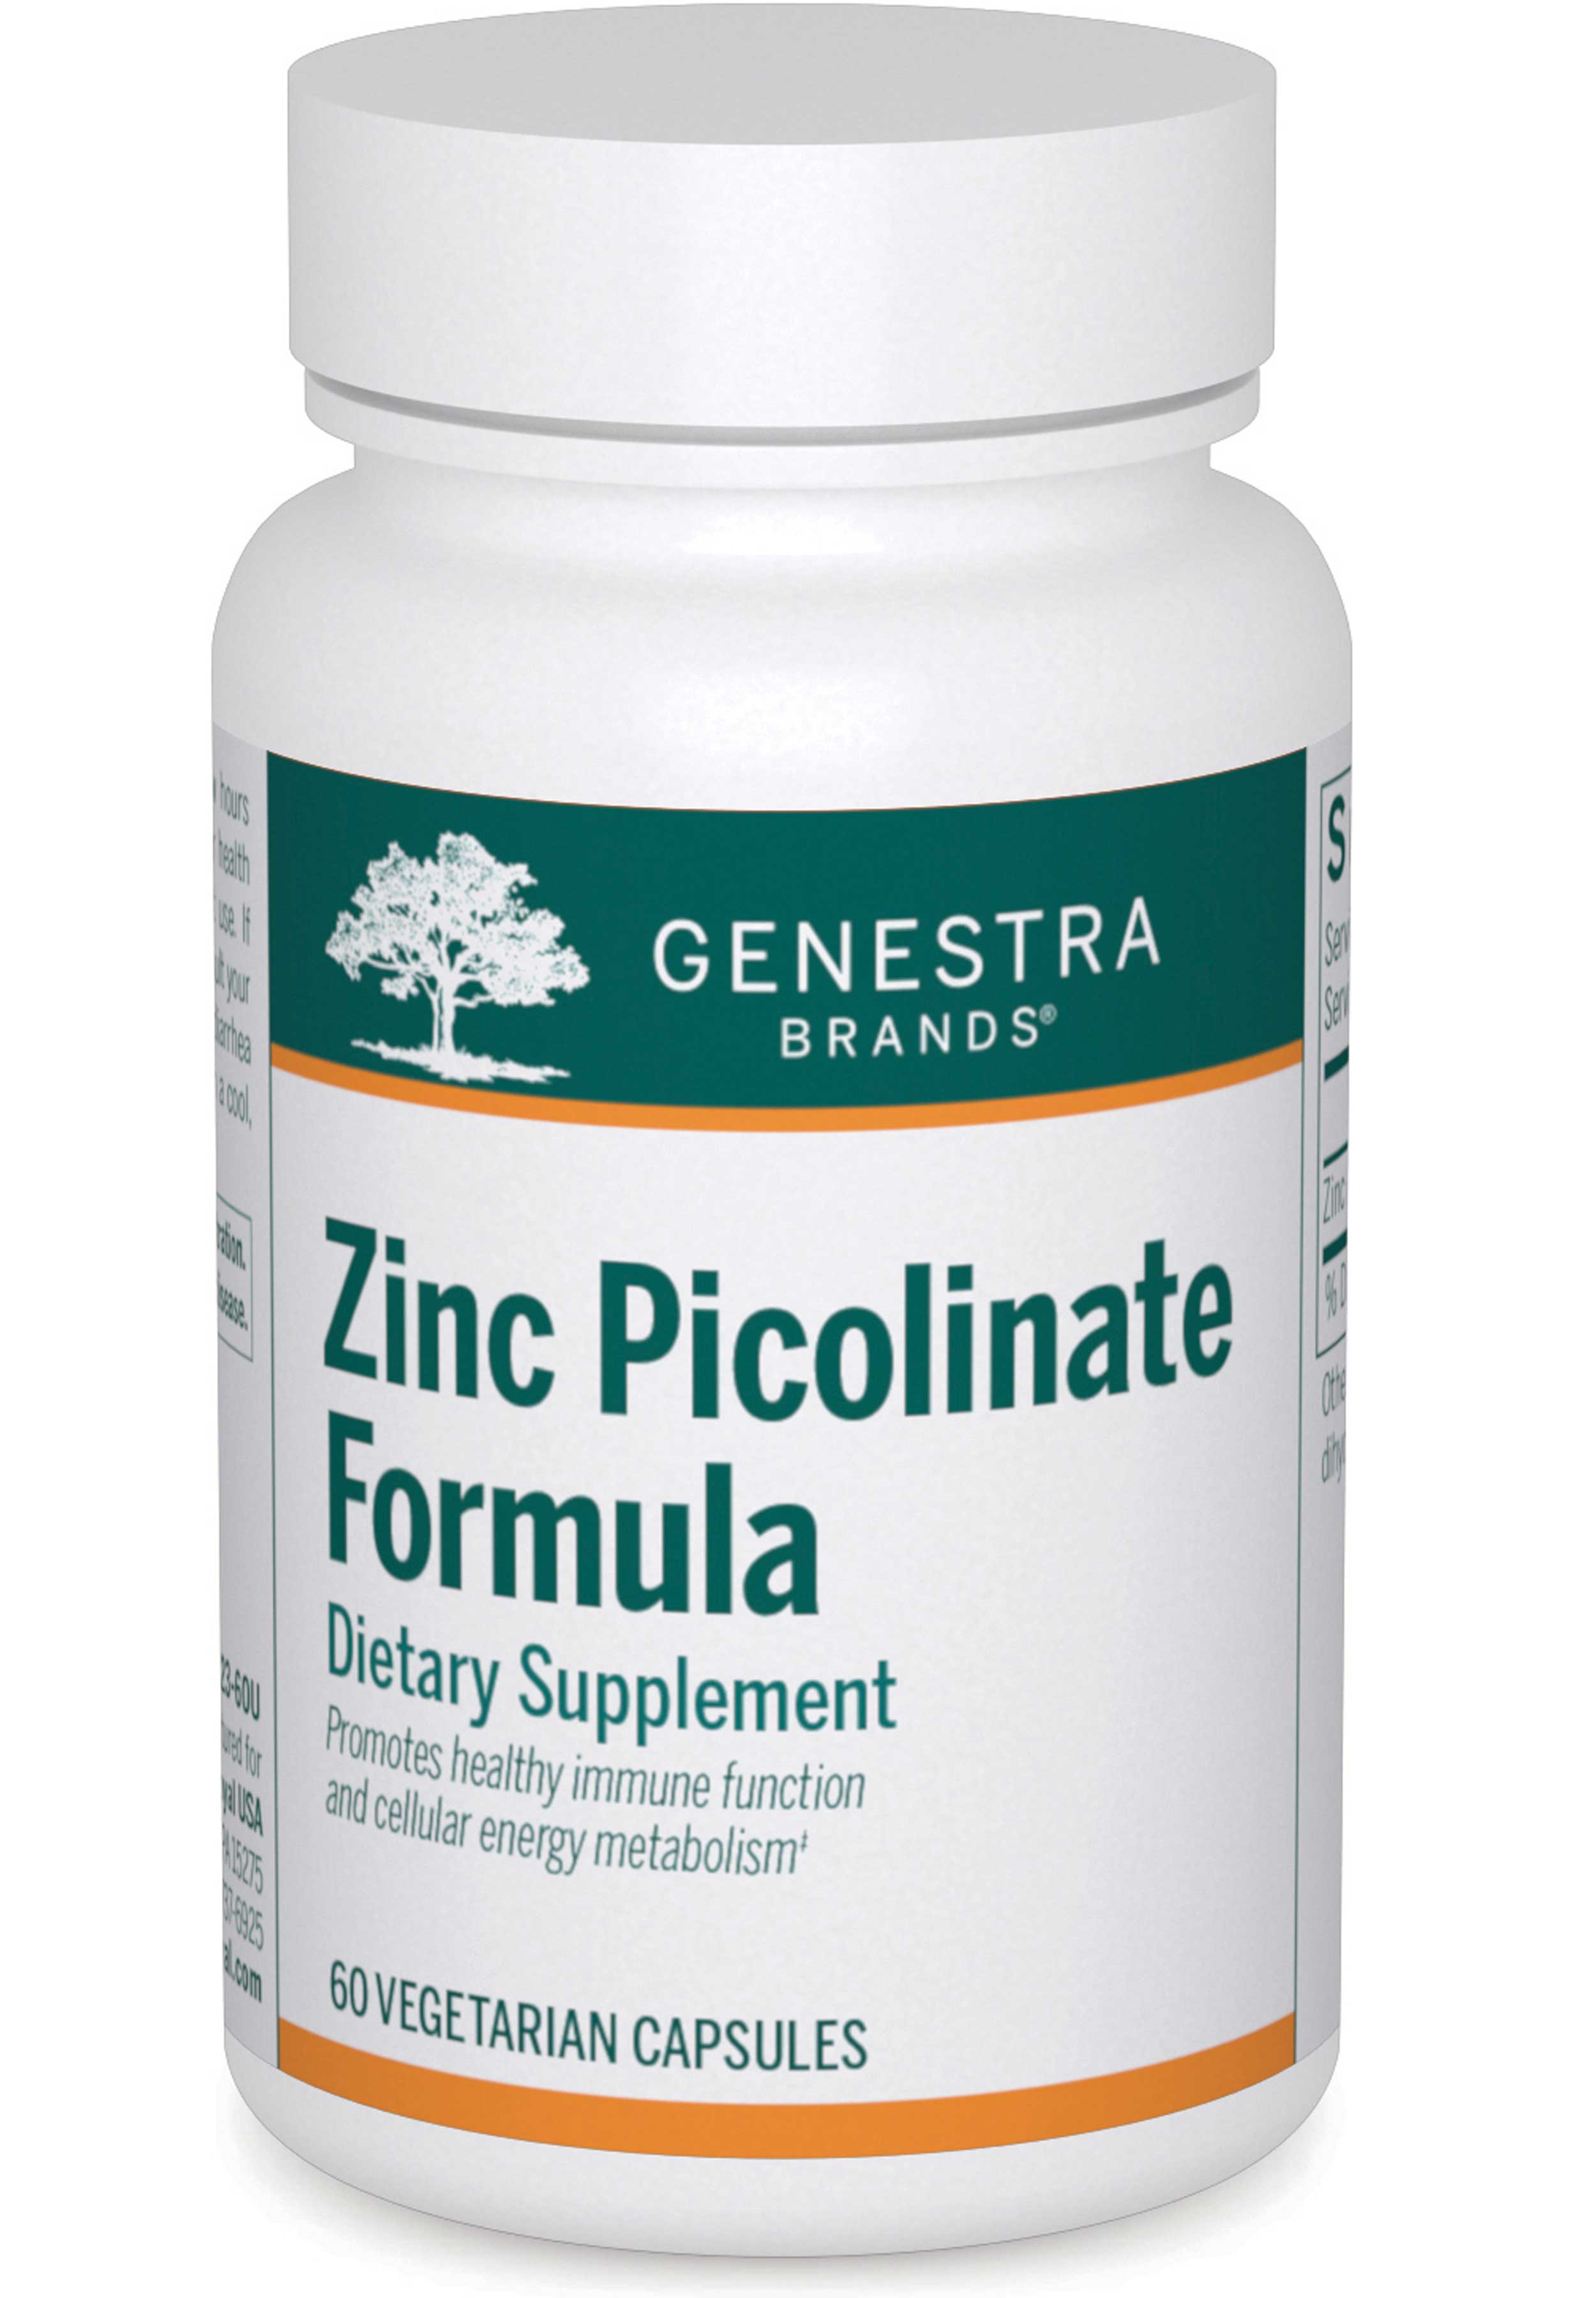 Genestra Brands Zinc Picolinate Formula